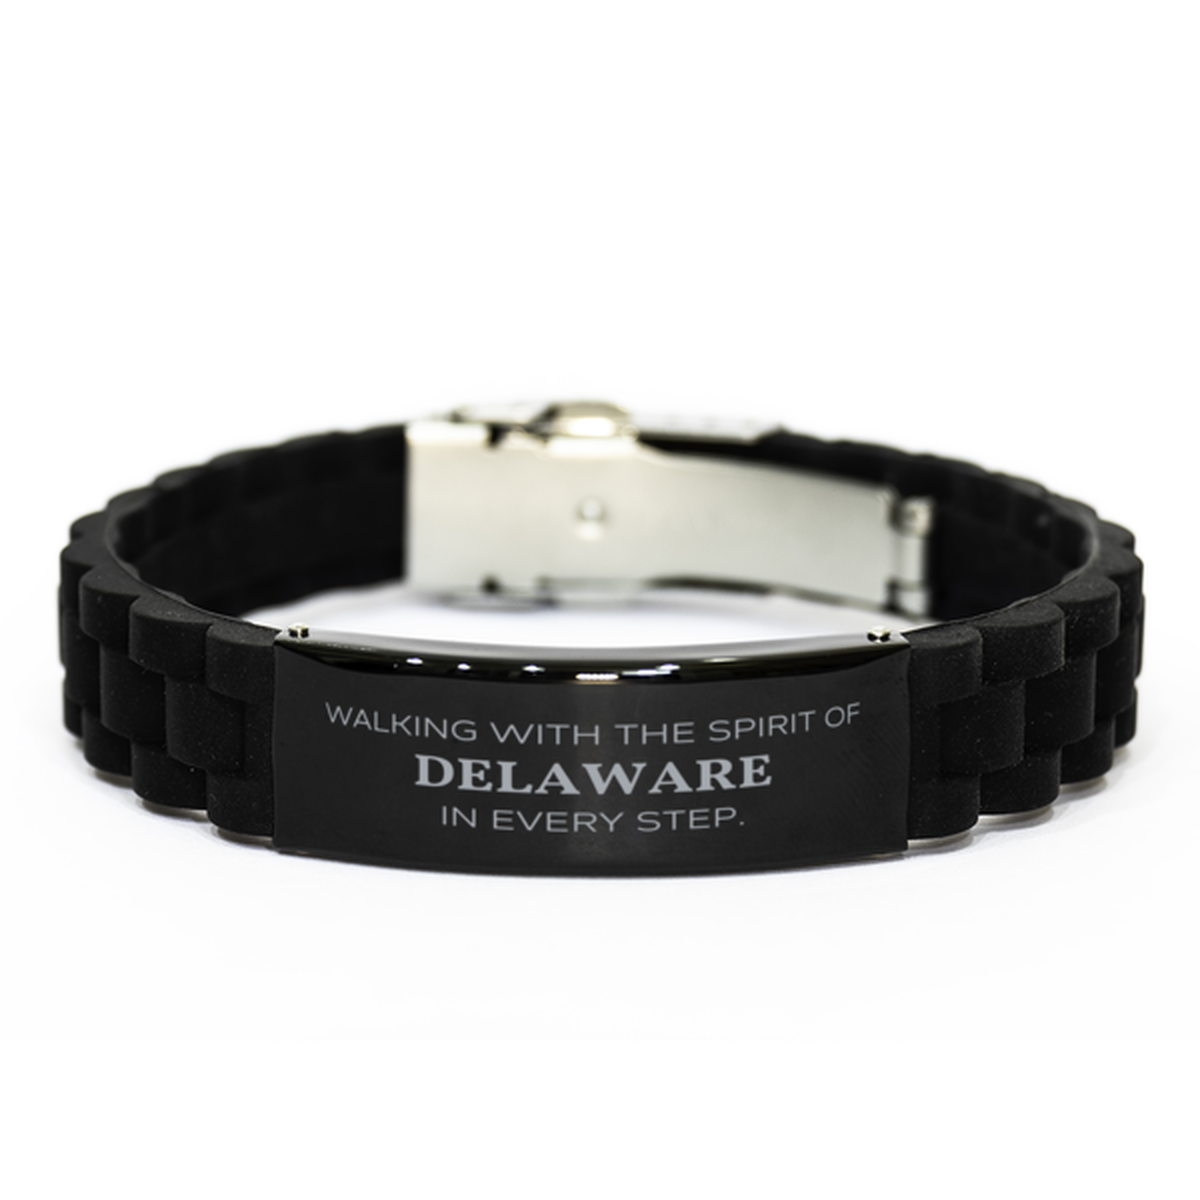 Delaware Gifts, Walking with the spirit, Love Delaware Birthday Christmas Black Glidelock Clasp Bracelet For Delaware People, Men, Women, Friends